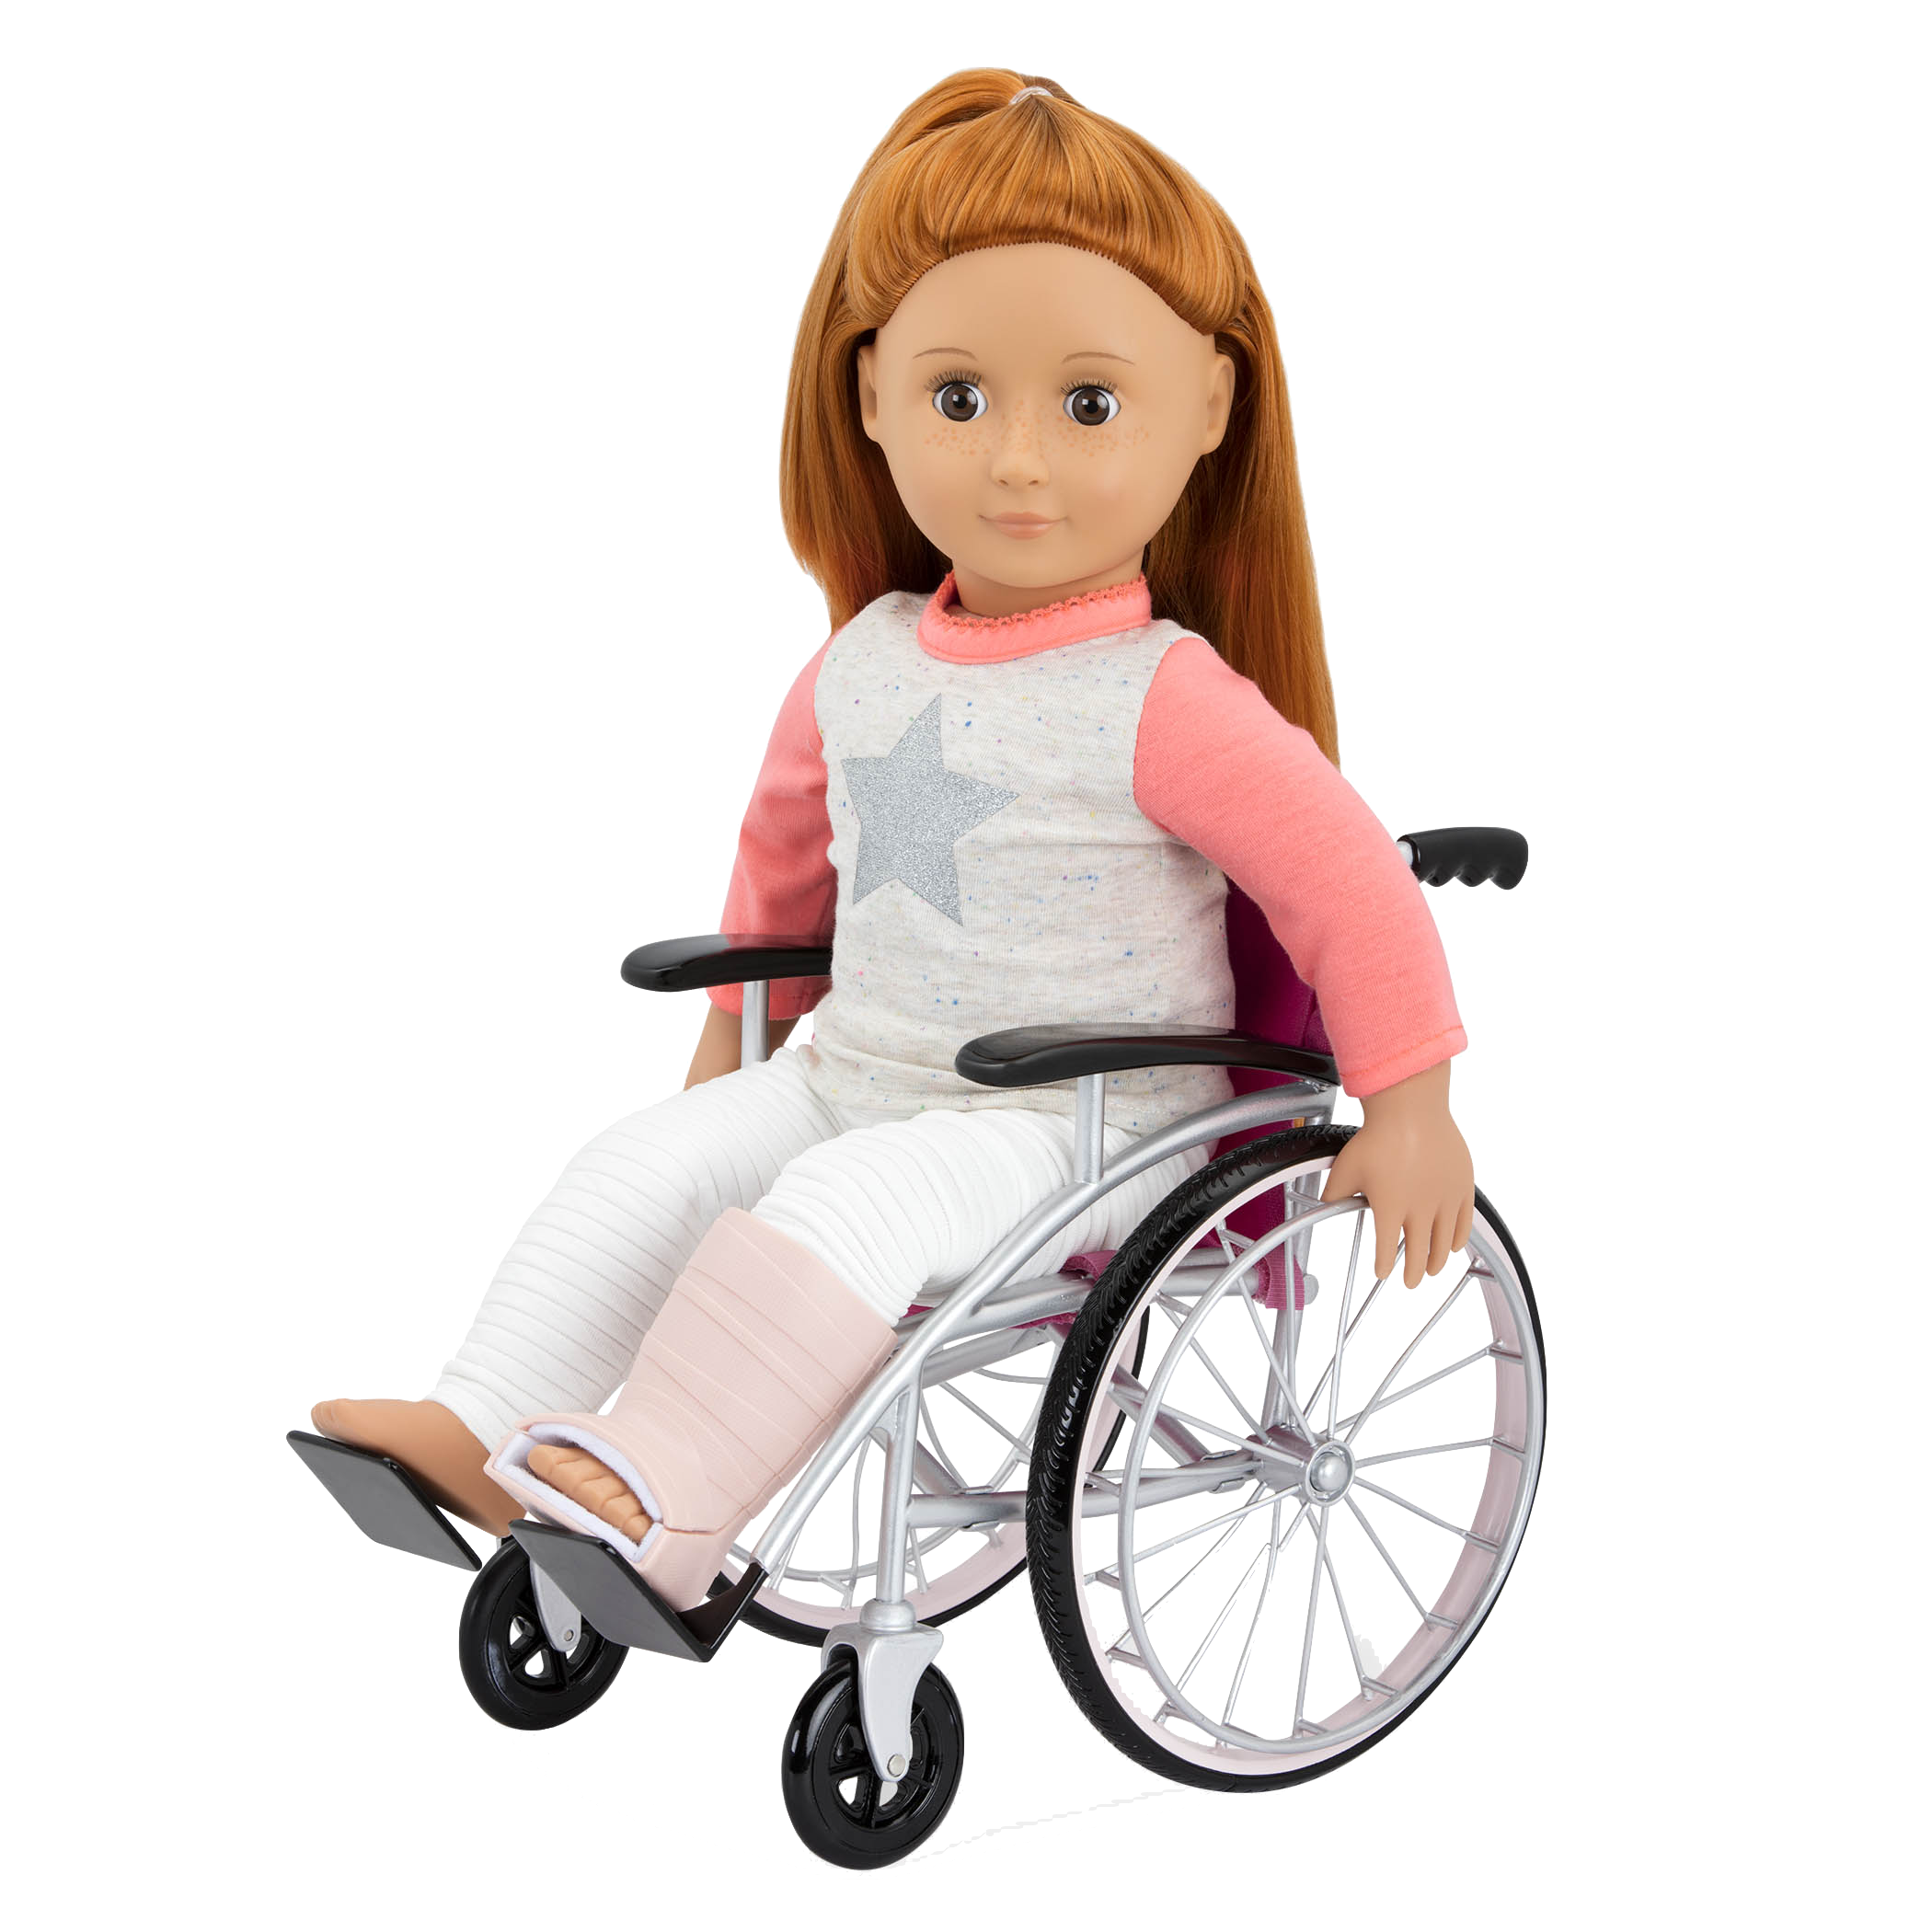 Heals on Wheels medical Accessories Noa in wheelchair